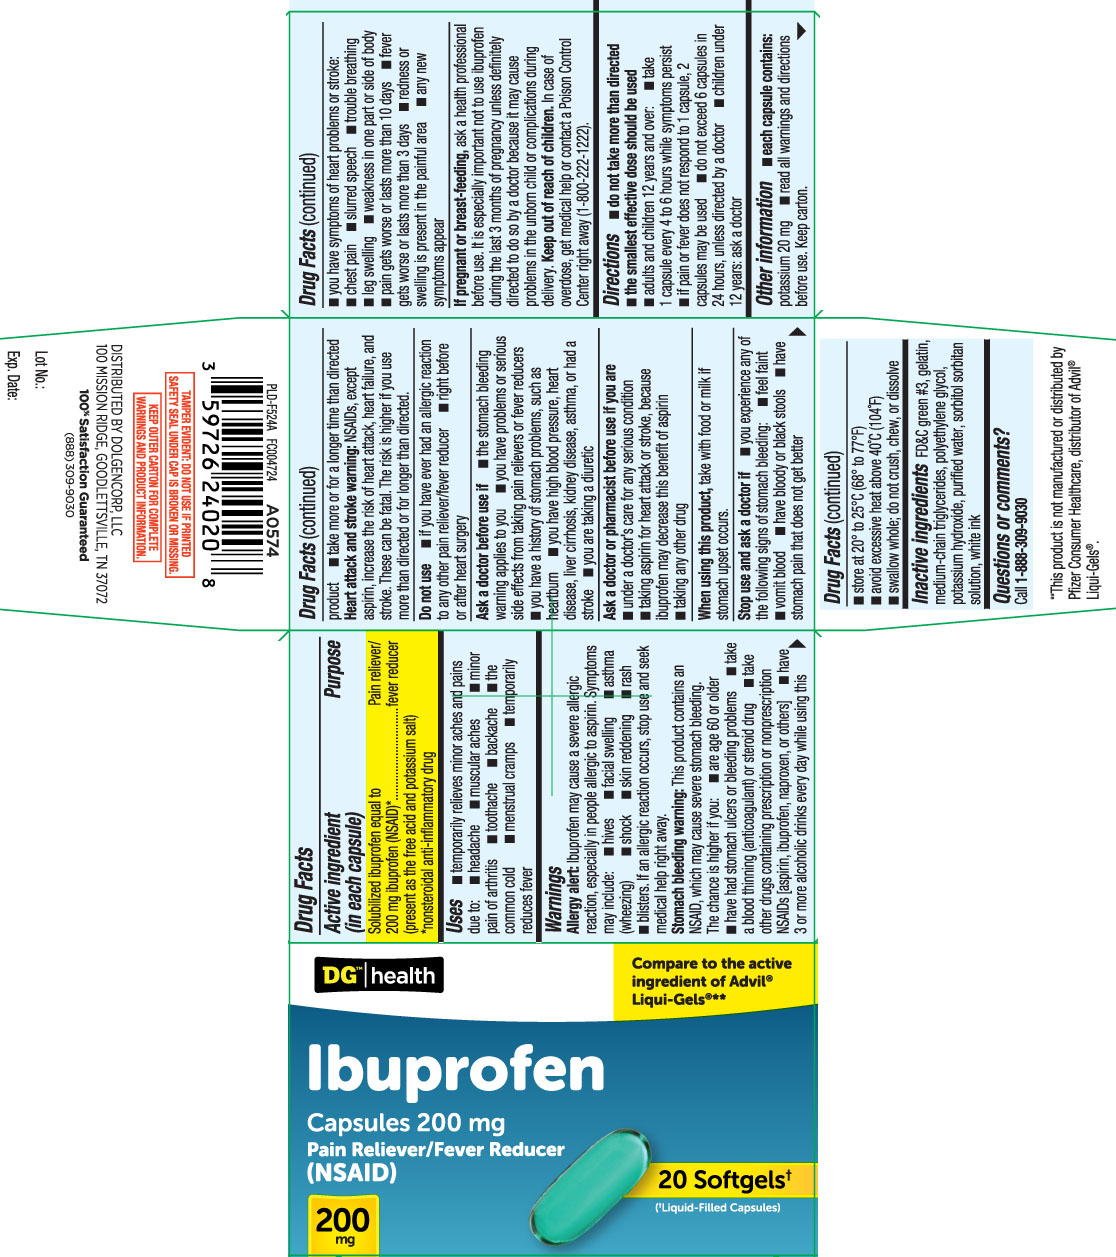 Solubilized ibuprofen equal to 200 mg ibuprofen (NSAID)* (present as the free acid and potassium salt)*nonsteroidal anti-inflammatory drug